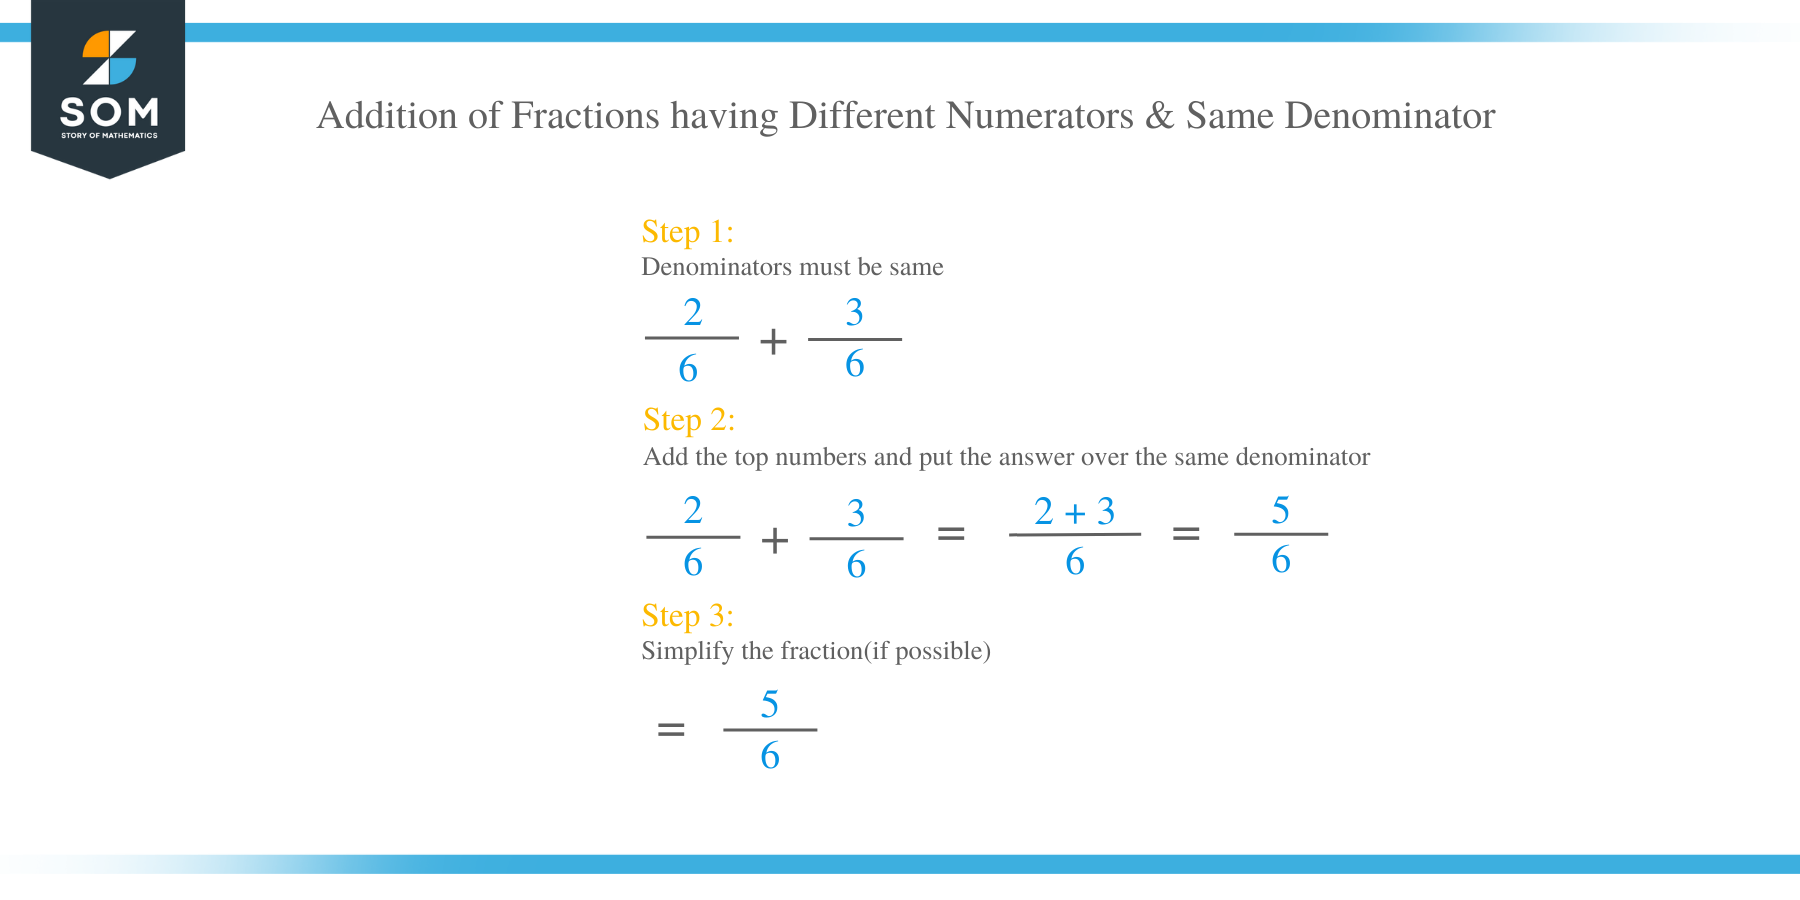 Addition of Fractions having Different Numerators & Same Denominator